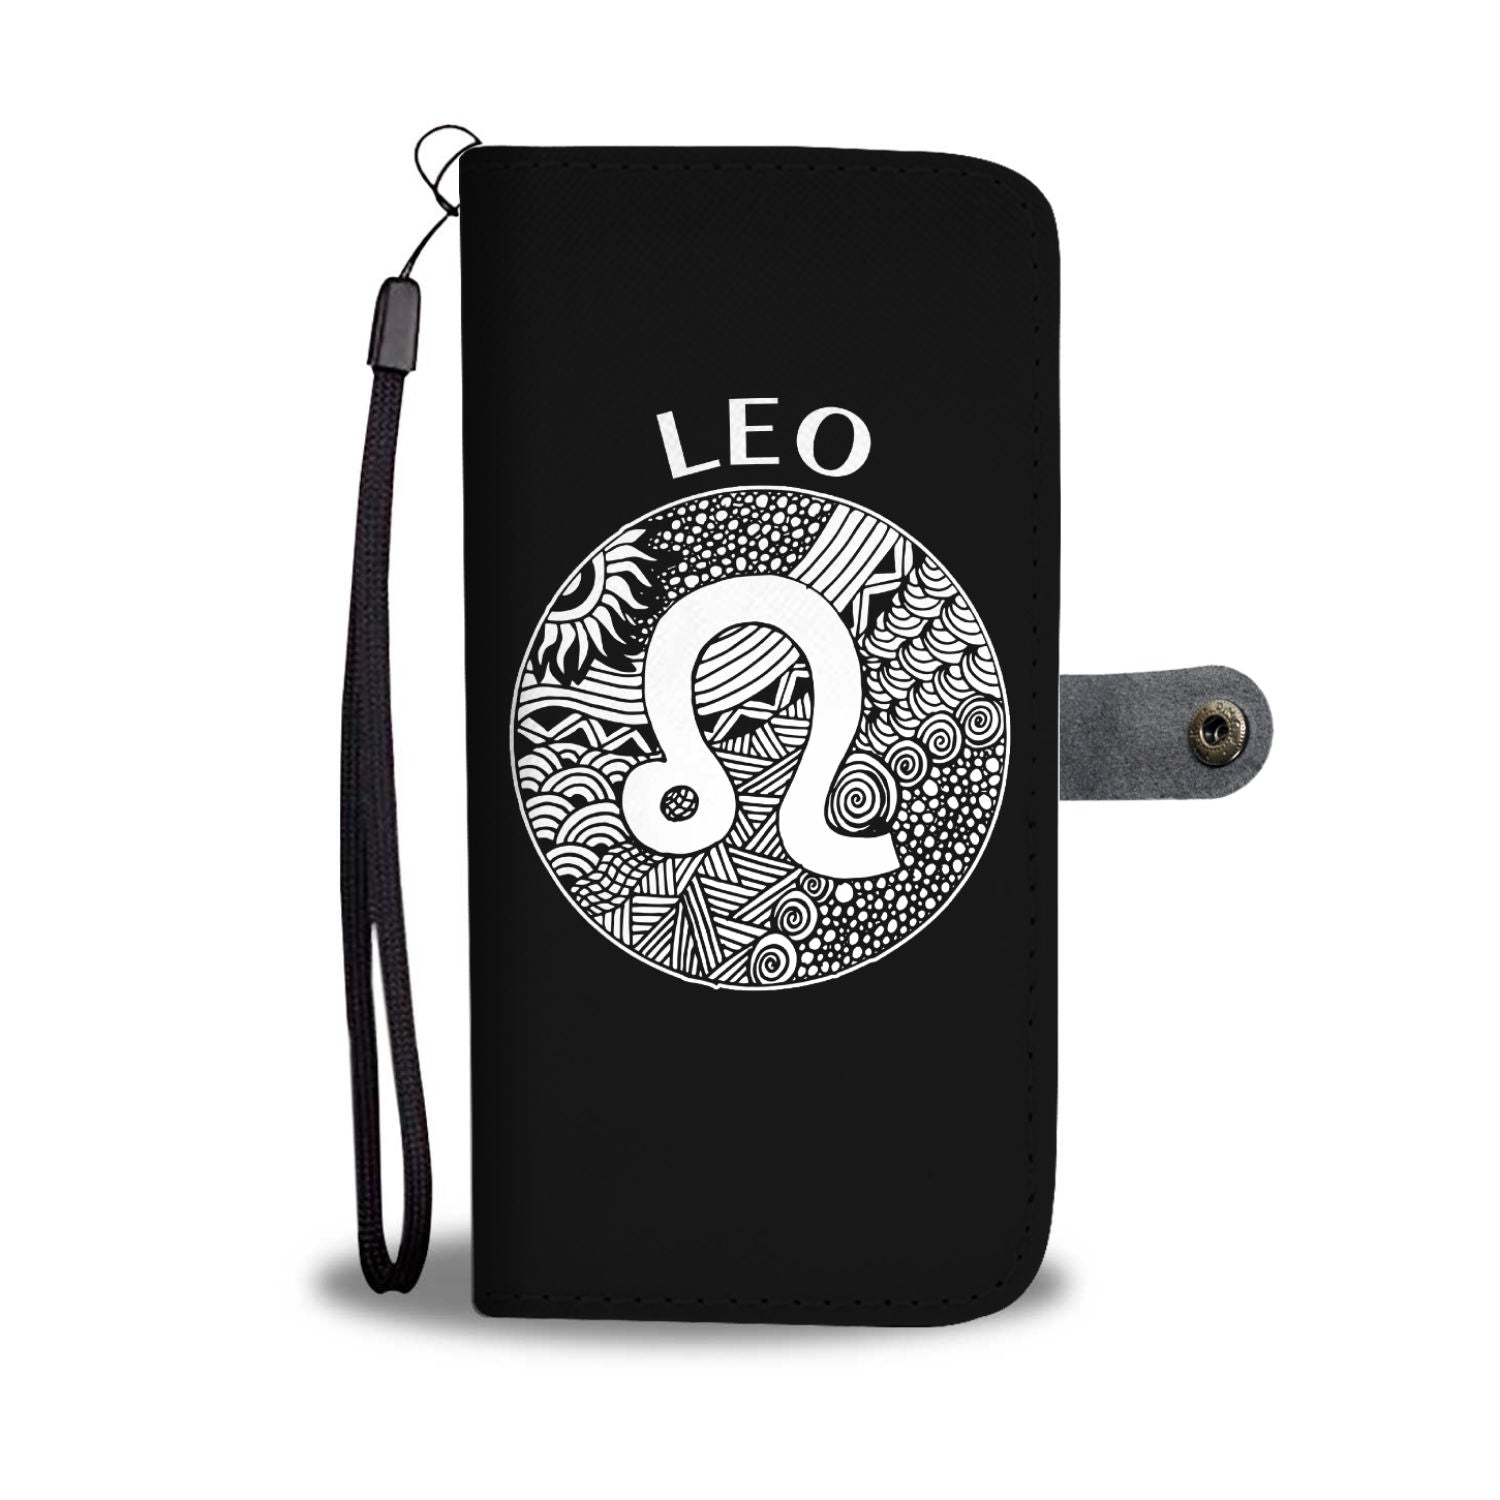 Leo Circle Design Phone Wallet